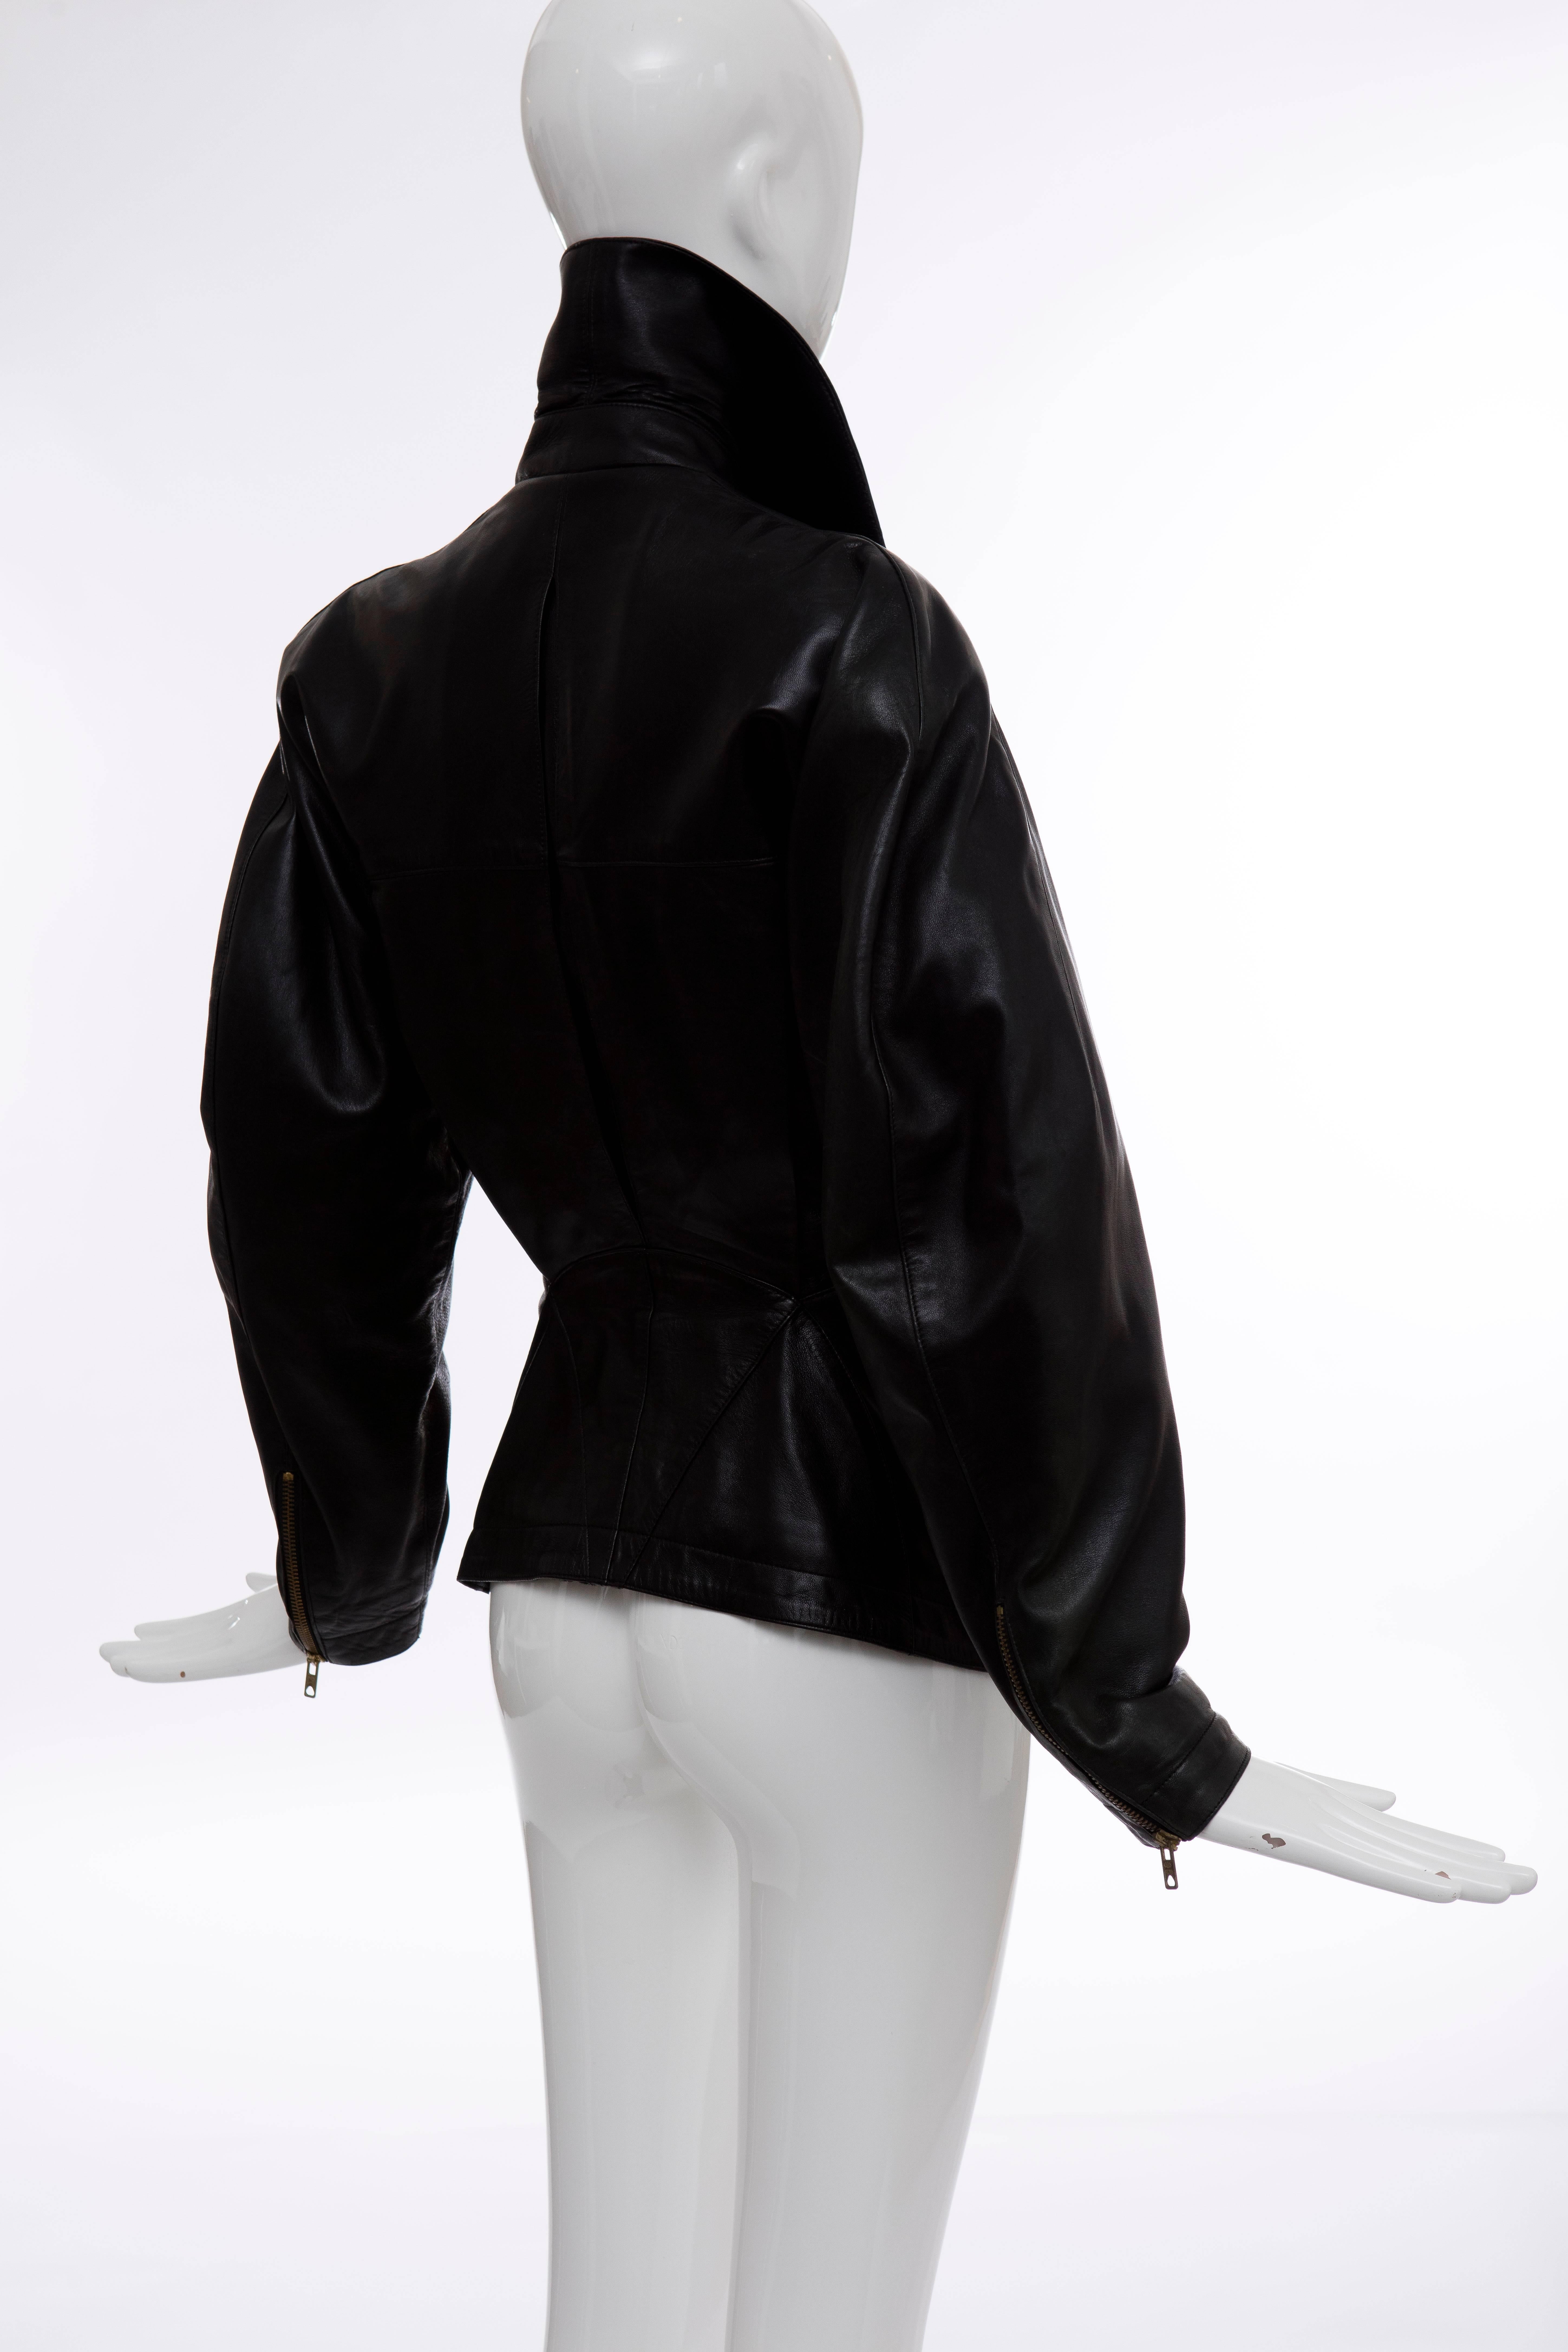 Azzedine Alai Black Zip Front Lambskin Leather Jacket , Circa 1986 For Sale 2